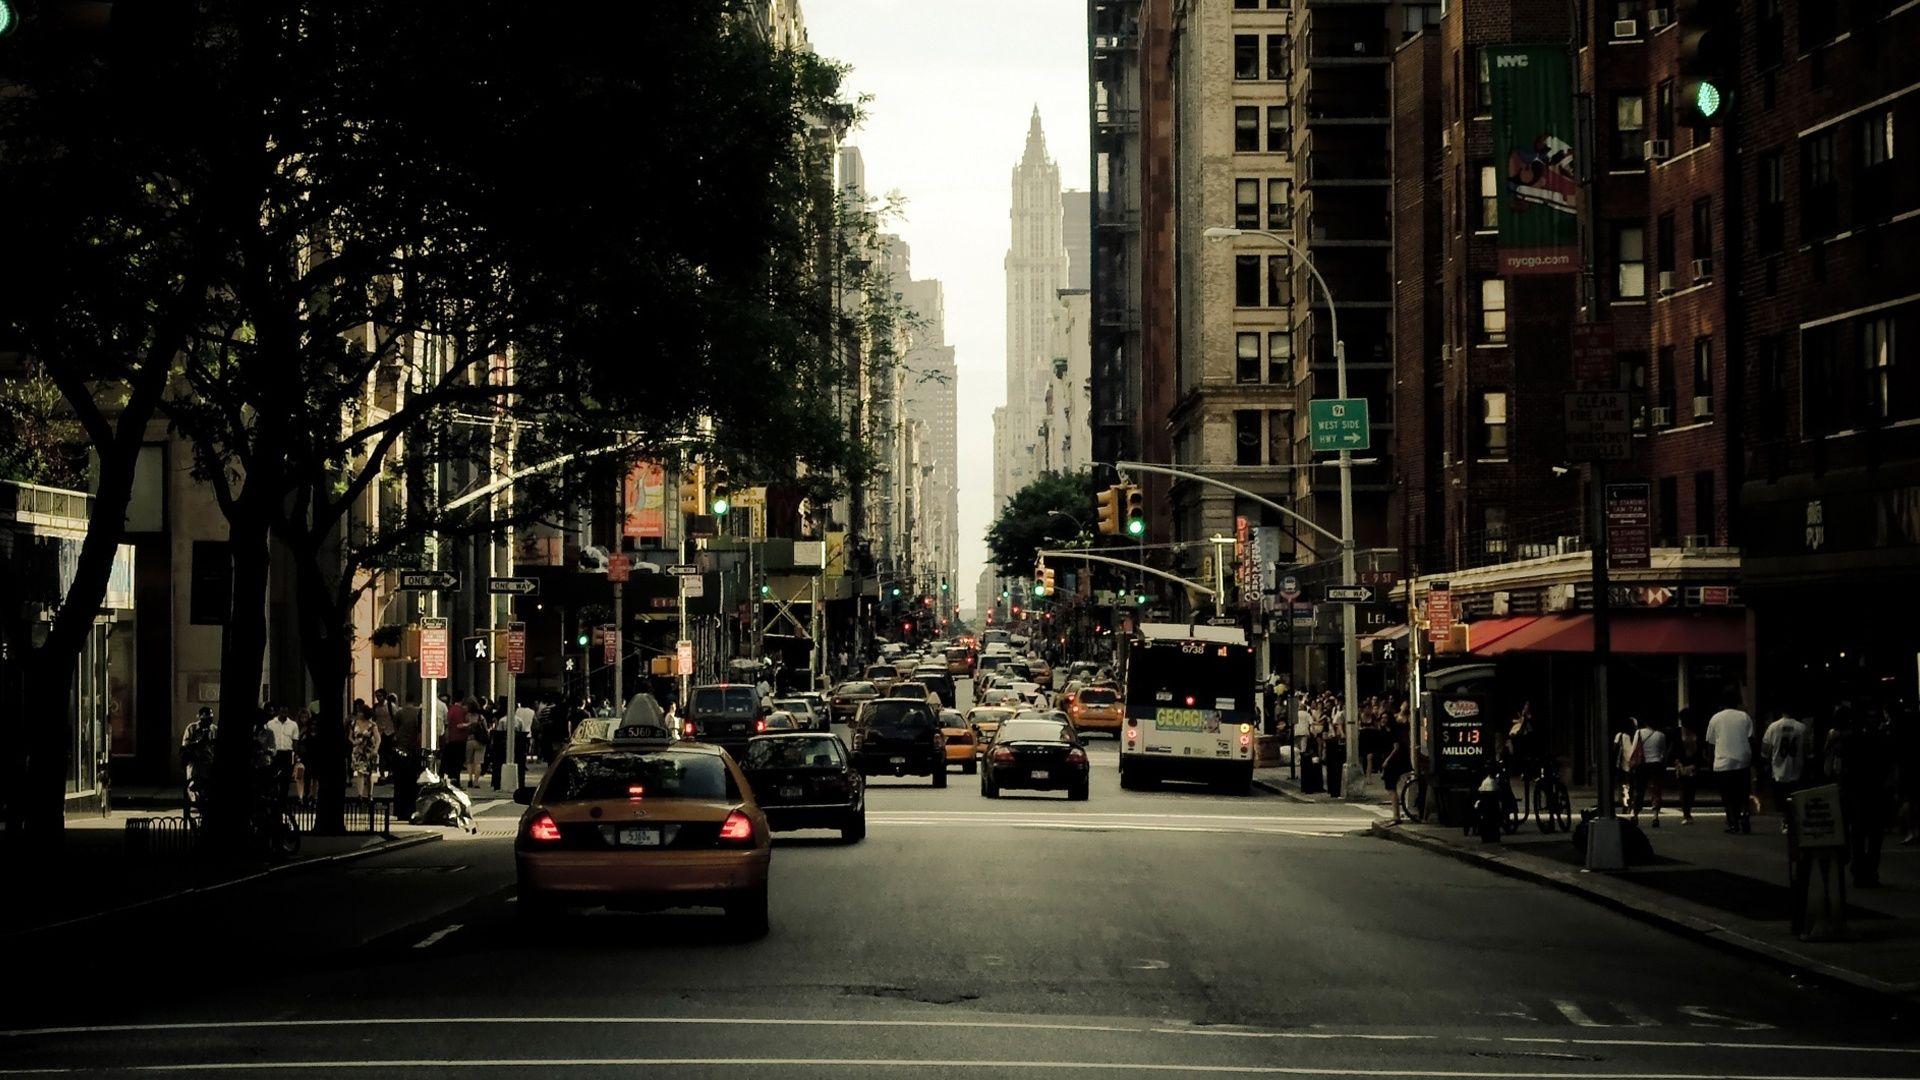 Free New York Street Image